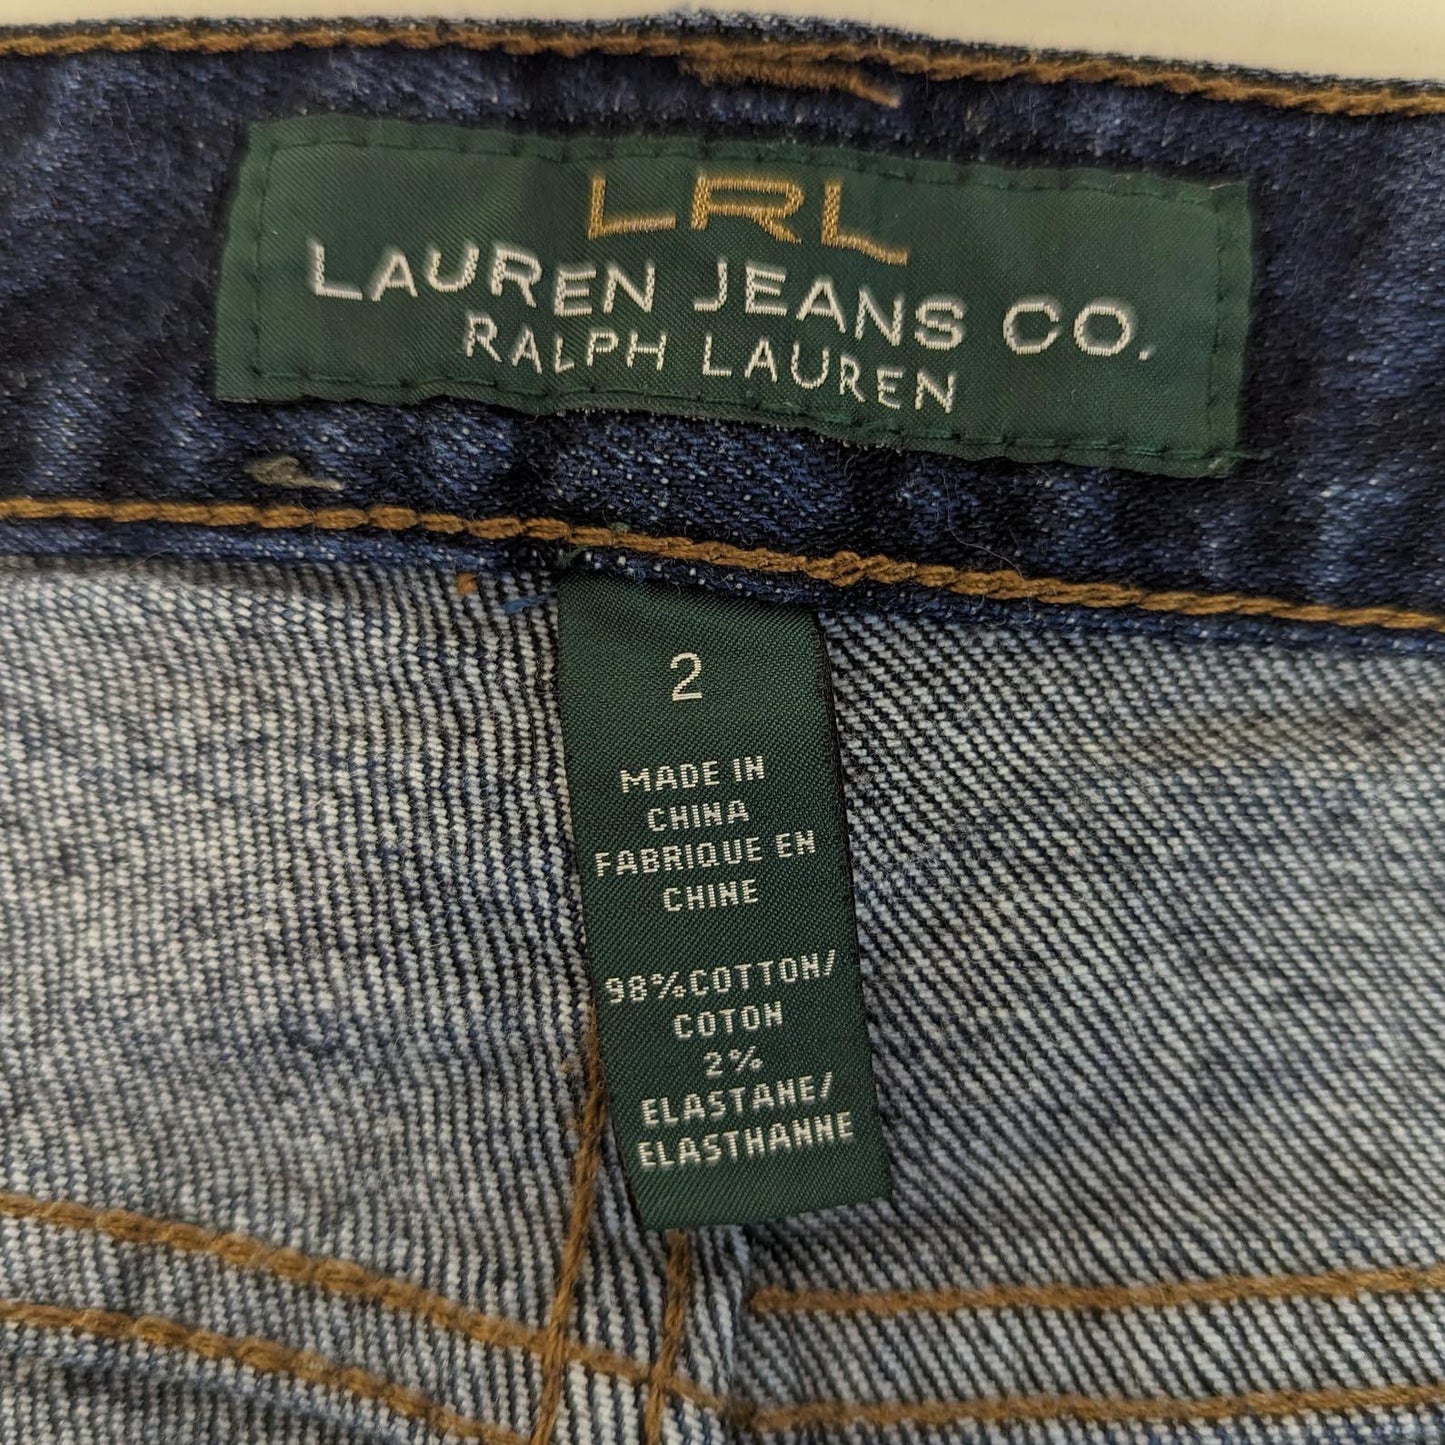 LRL Ralph Lauren Jeans Co. Women's Size 2 Classic Boot Cut Blue Jeans Dark Wash